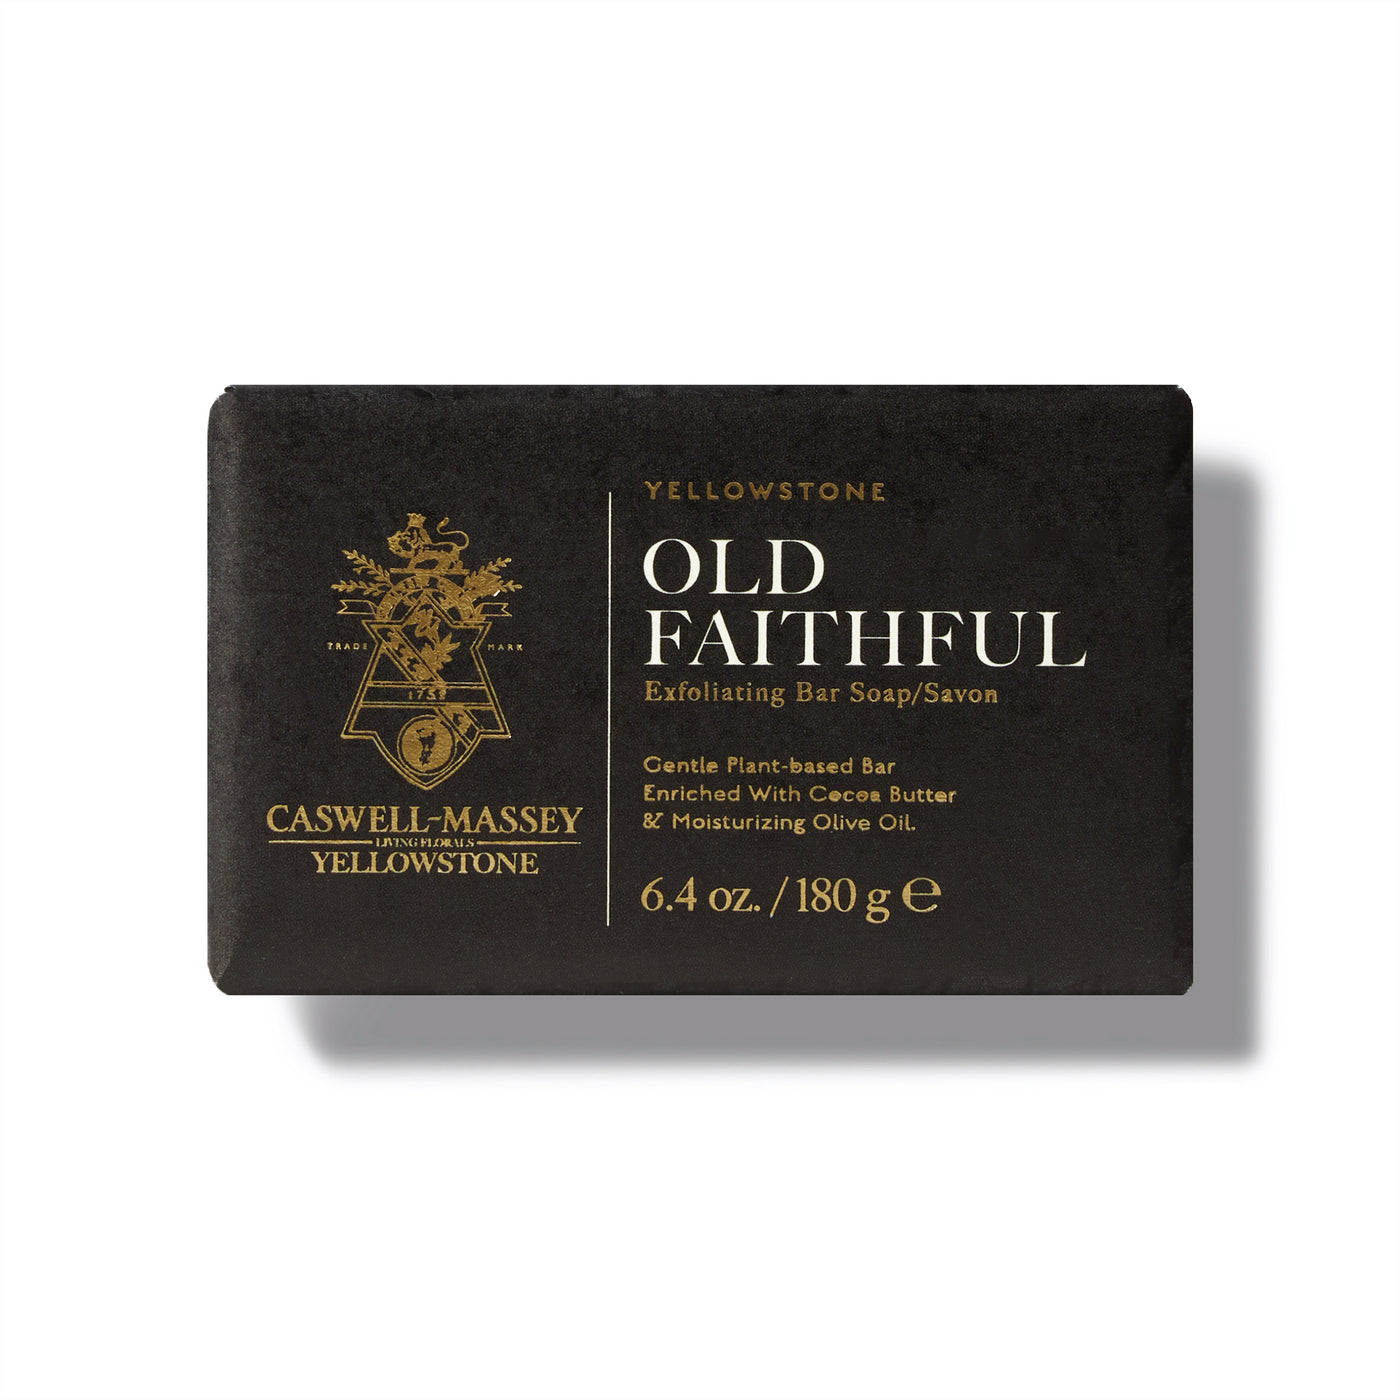 Yellowstone Old Faithful soap